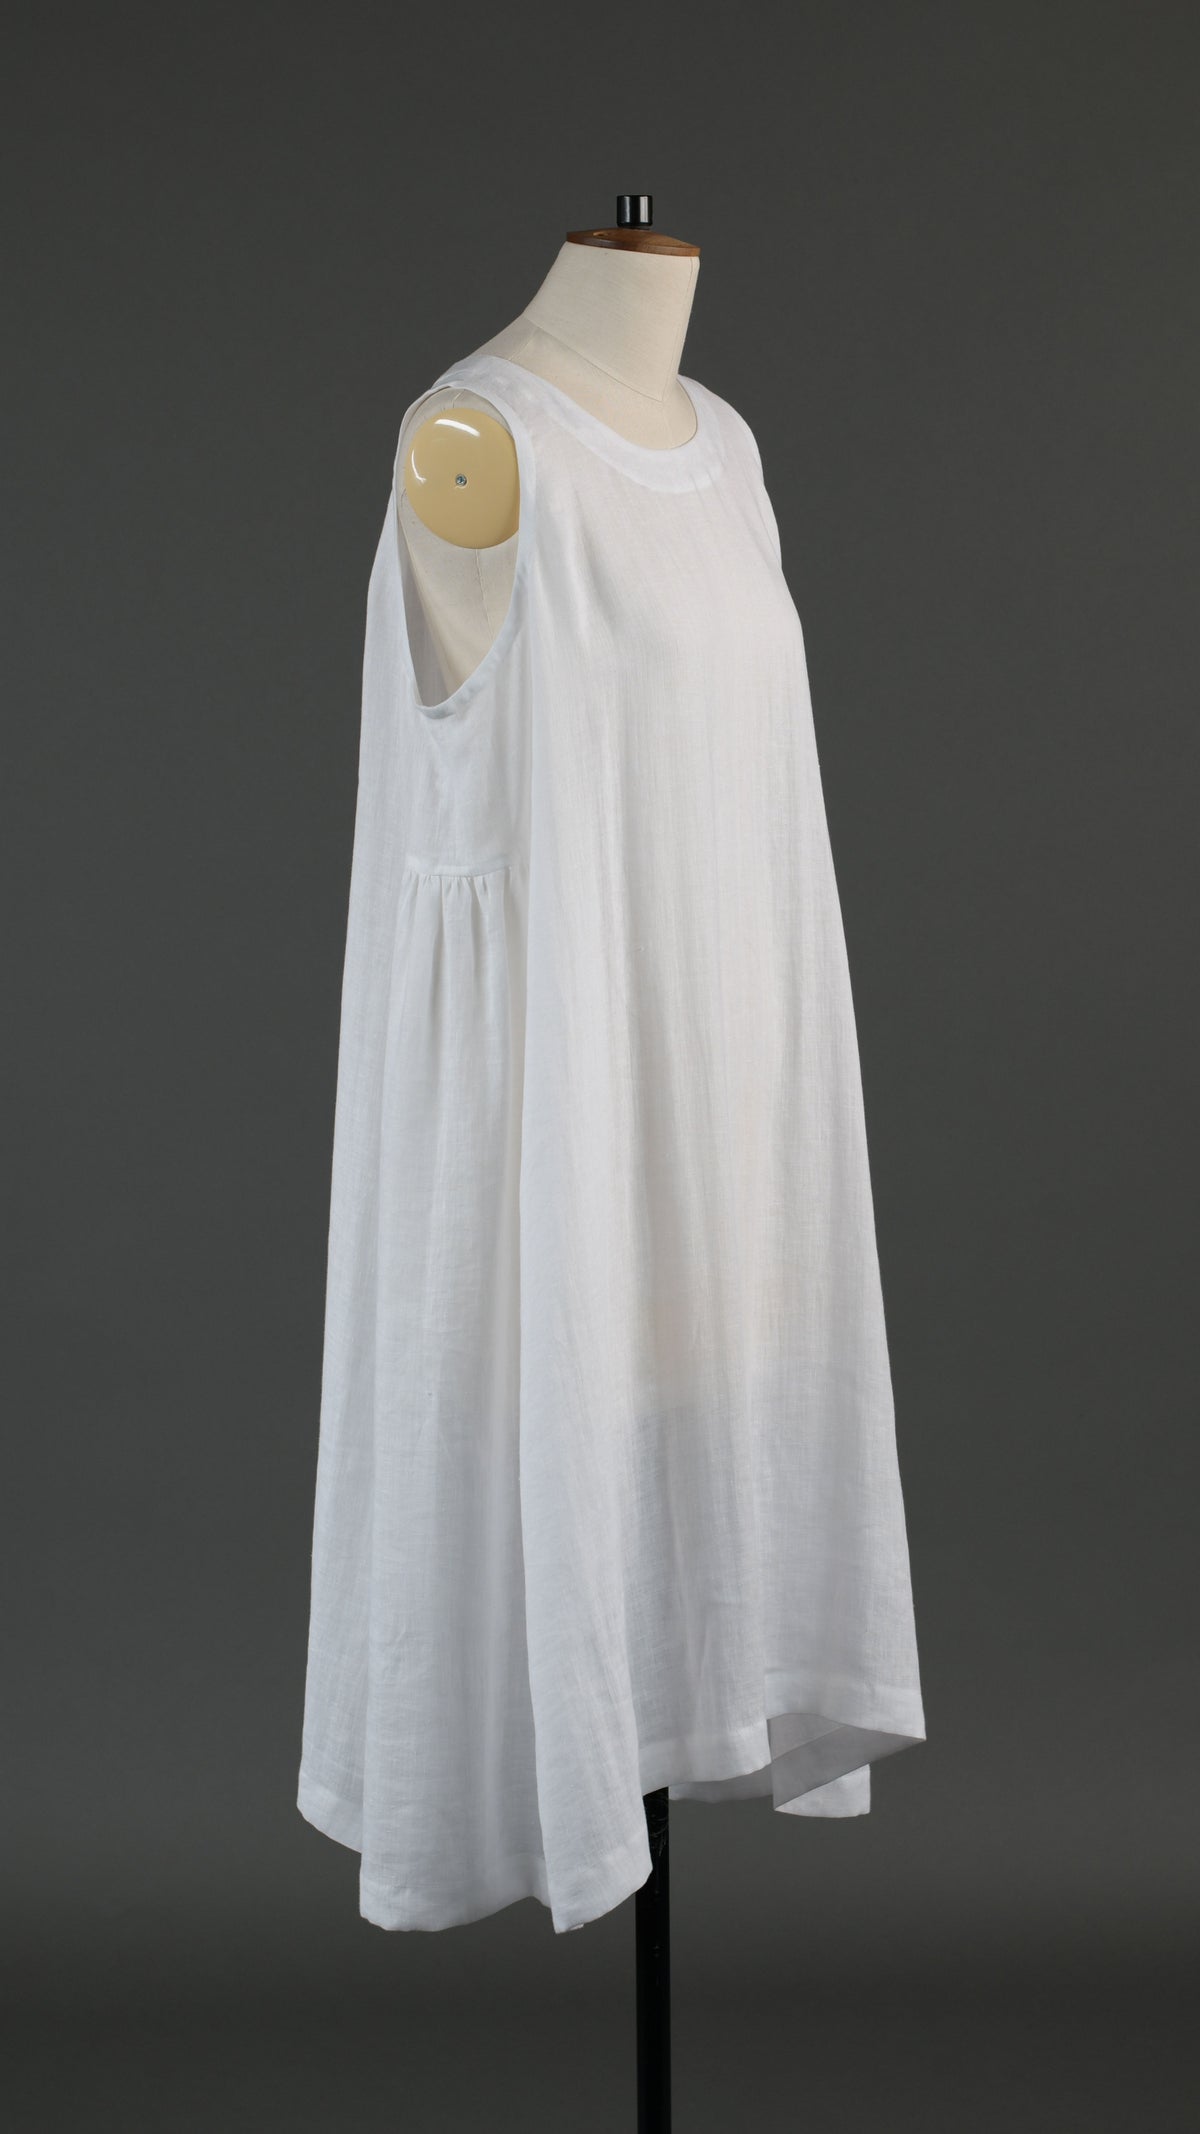 3/4 length side pleated sleeveless dress in white